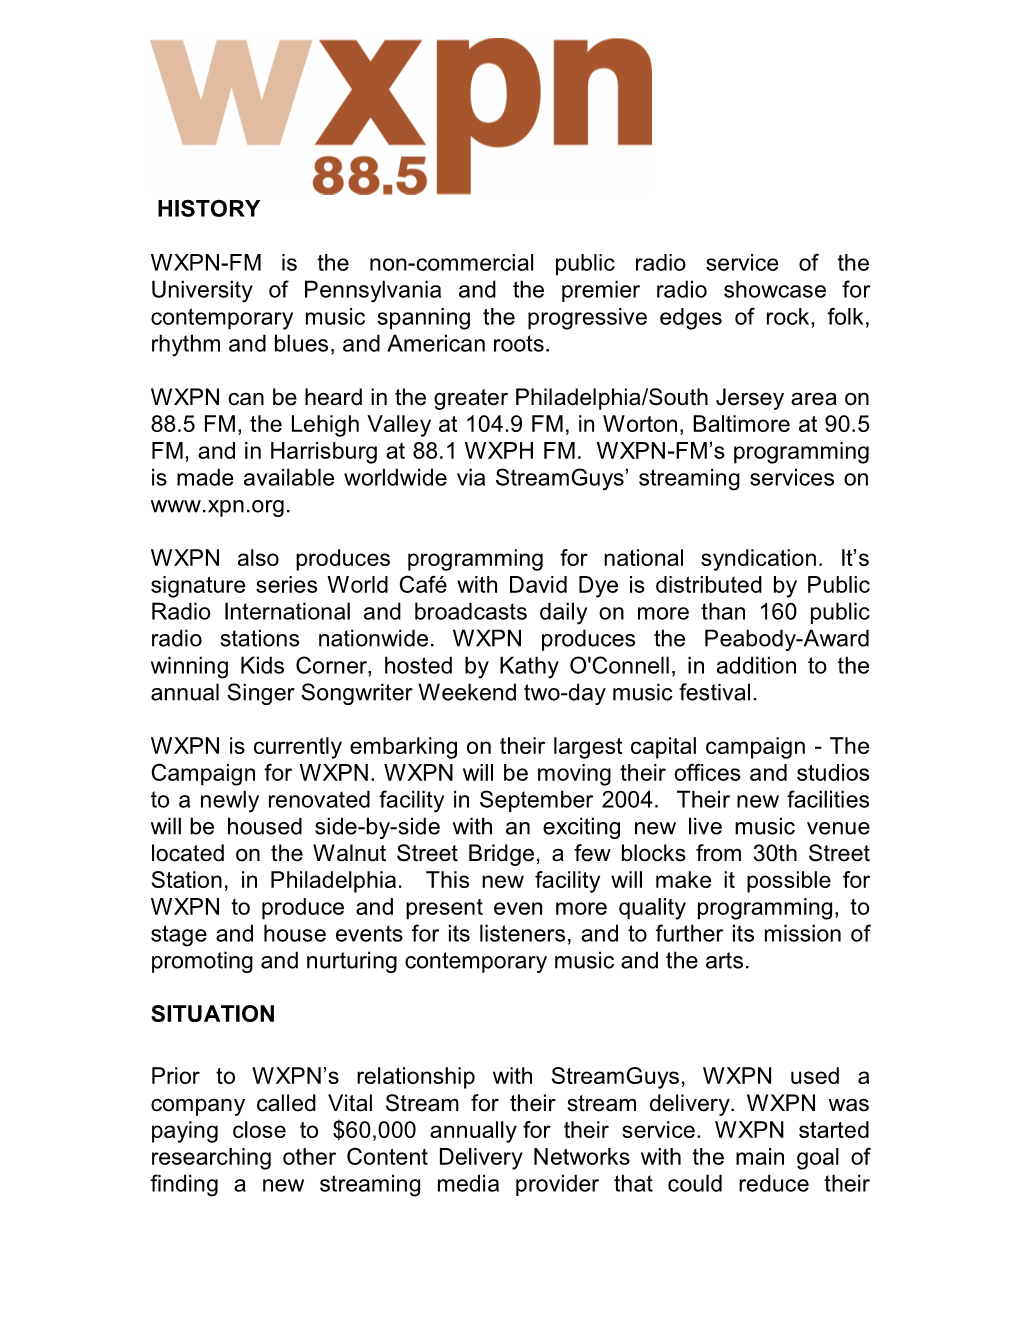 HISTORY WXPN-FM Is the Non-Commercial Public Radio